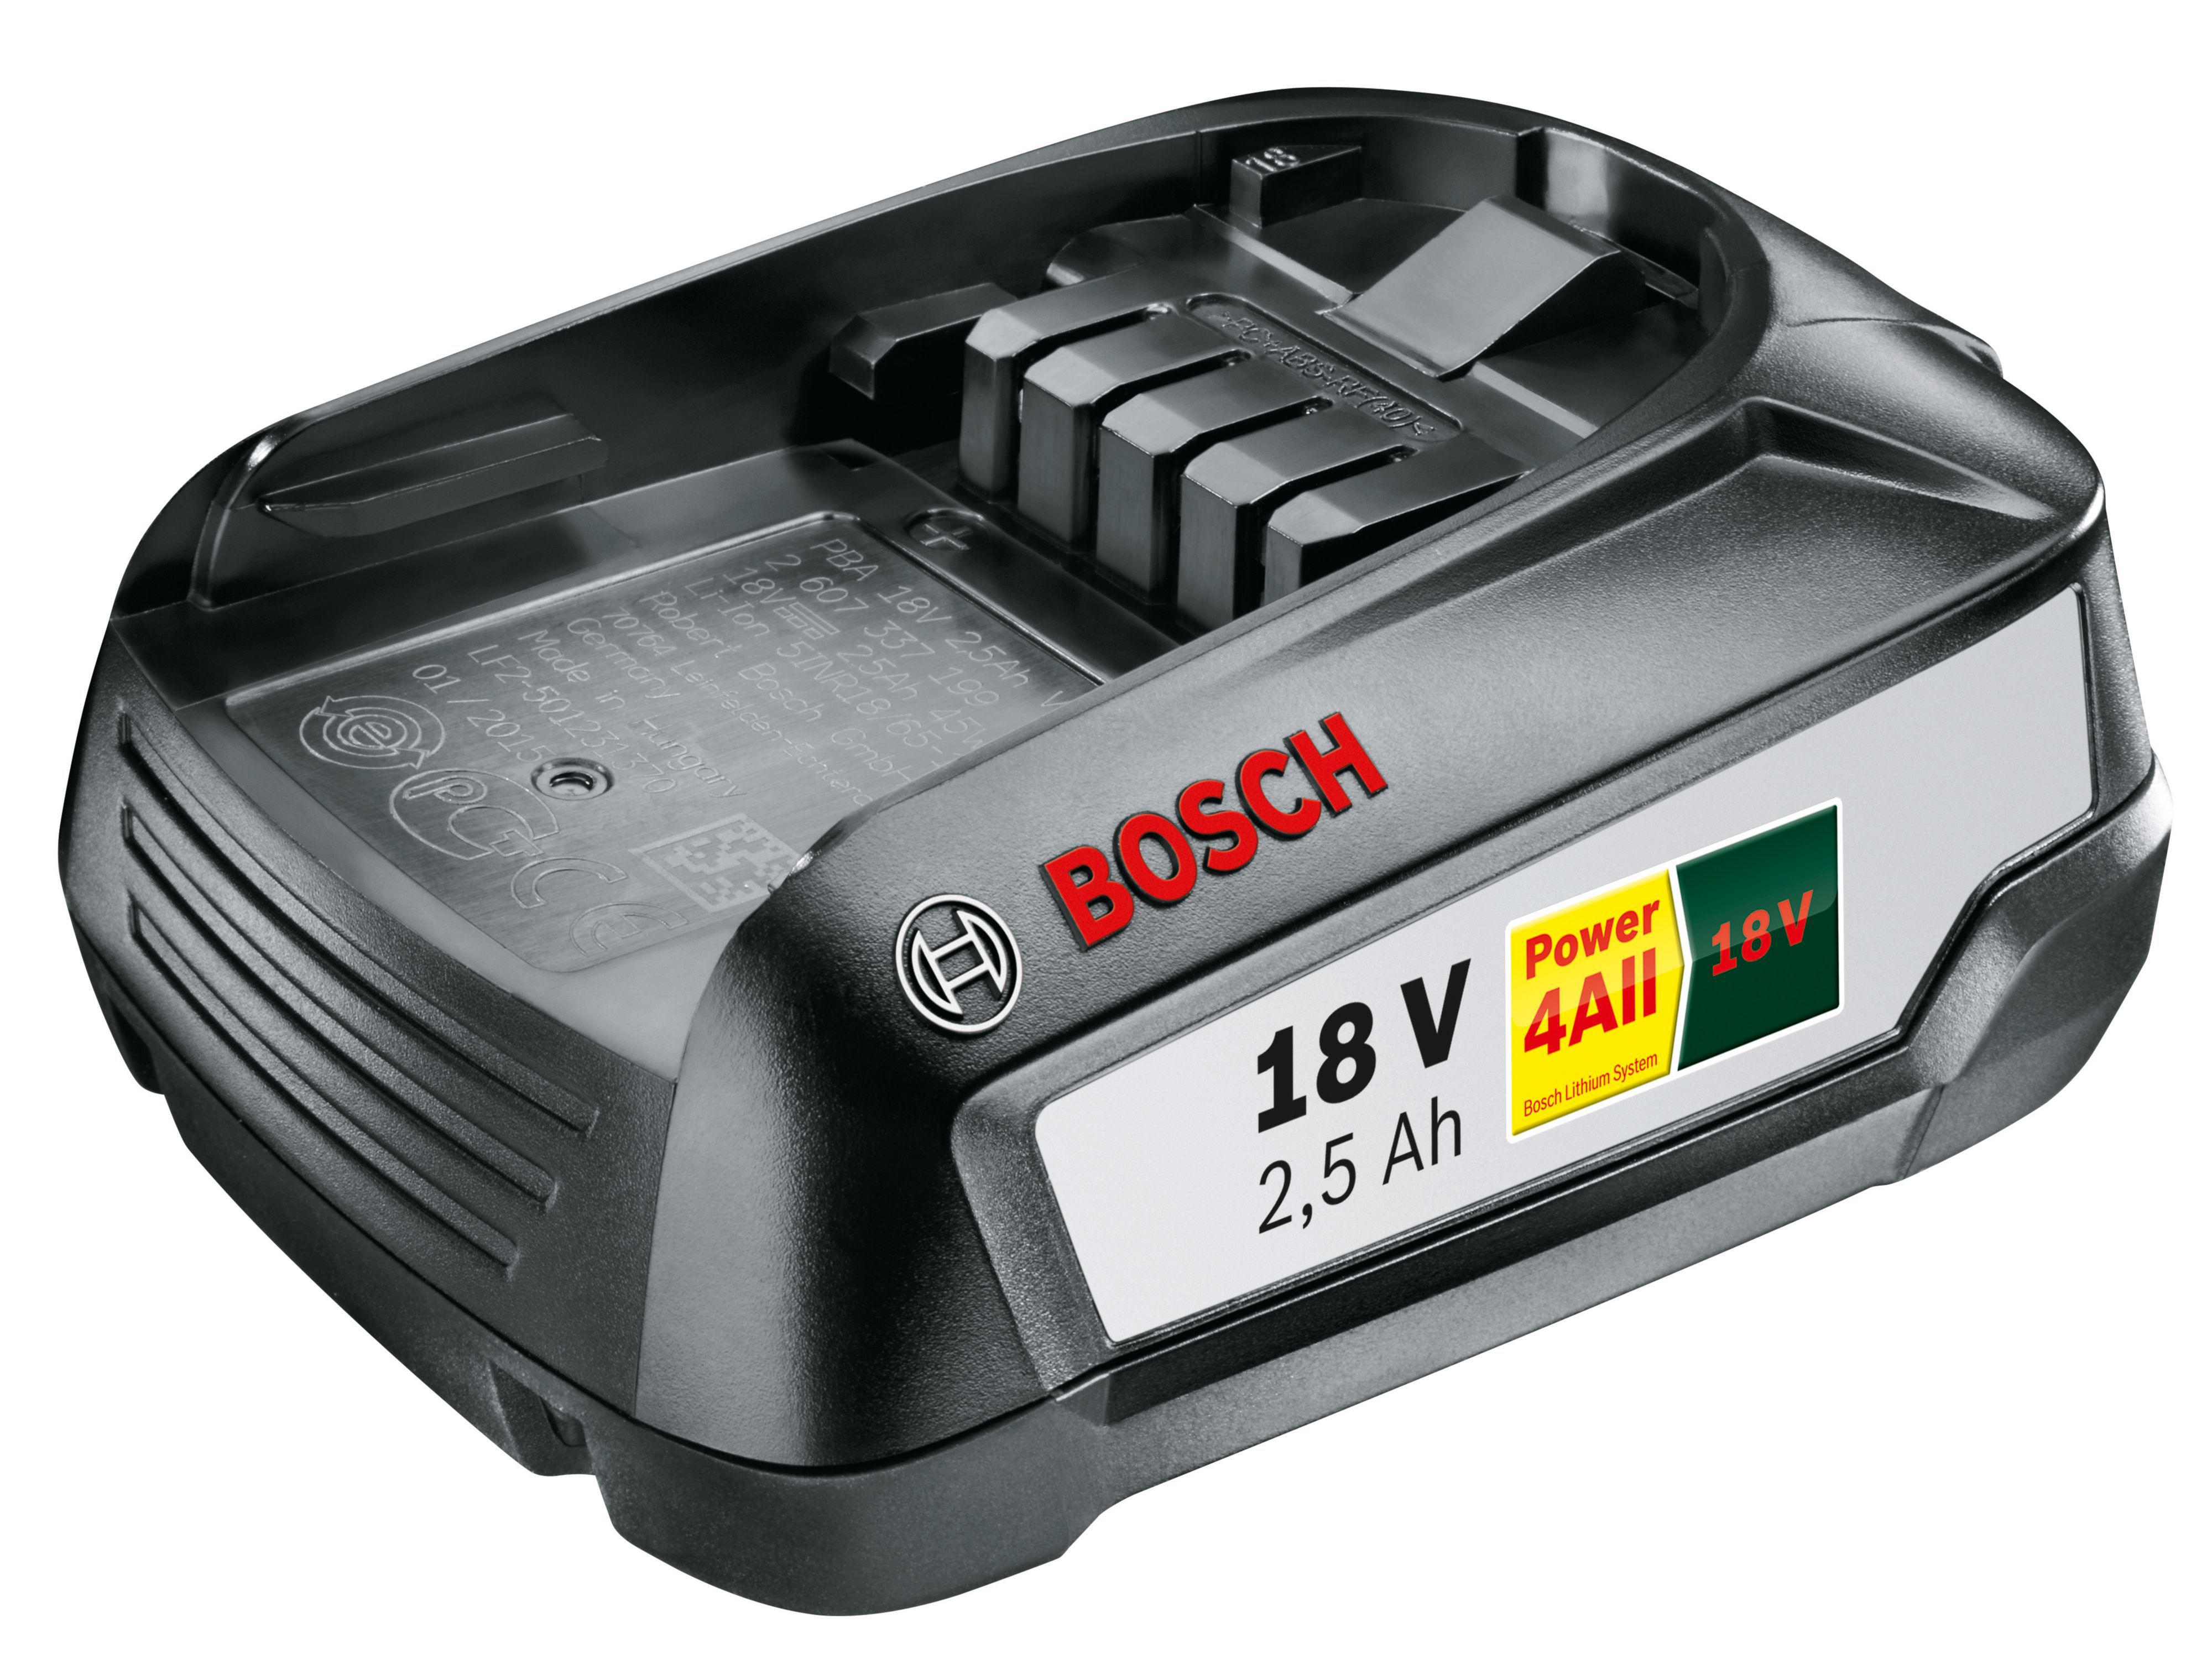 Bosch 18V Li-ion 2.5Ah Battery pack | Departments | DIY at B&Q